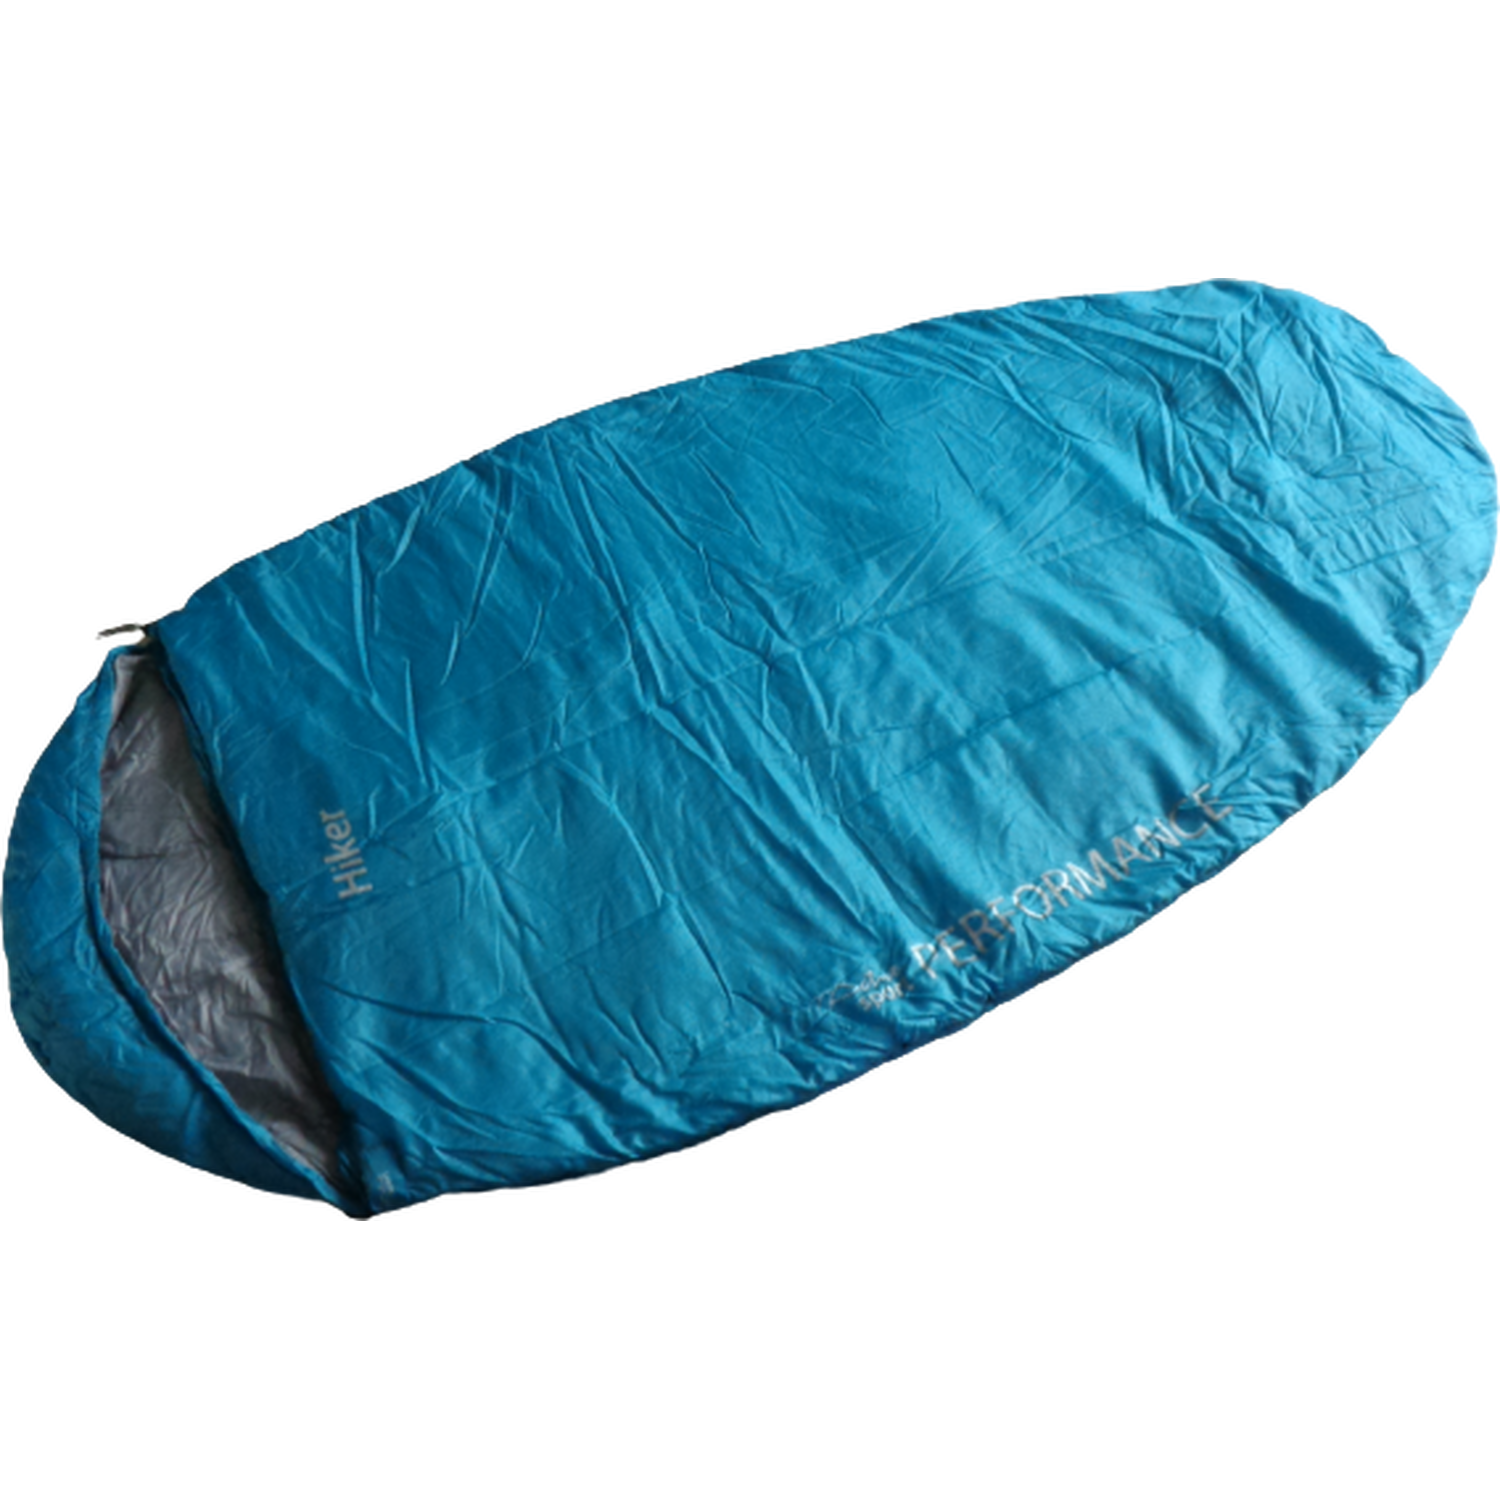 Hiker Oval Sleeping Bag - Blue Image